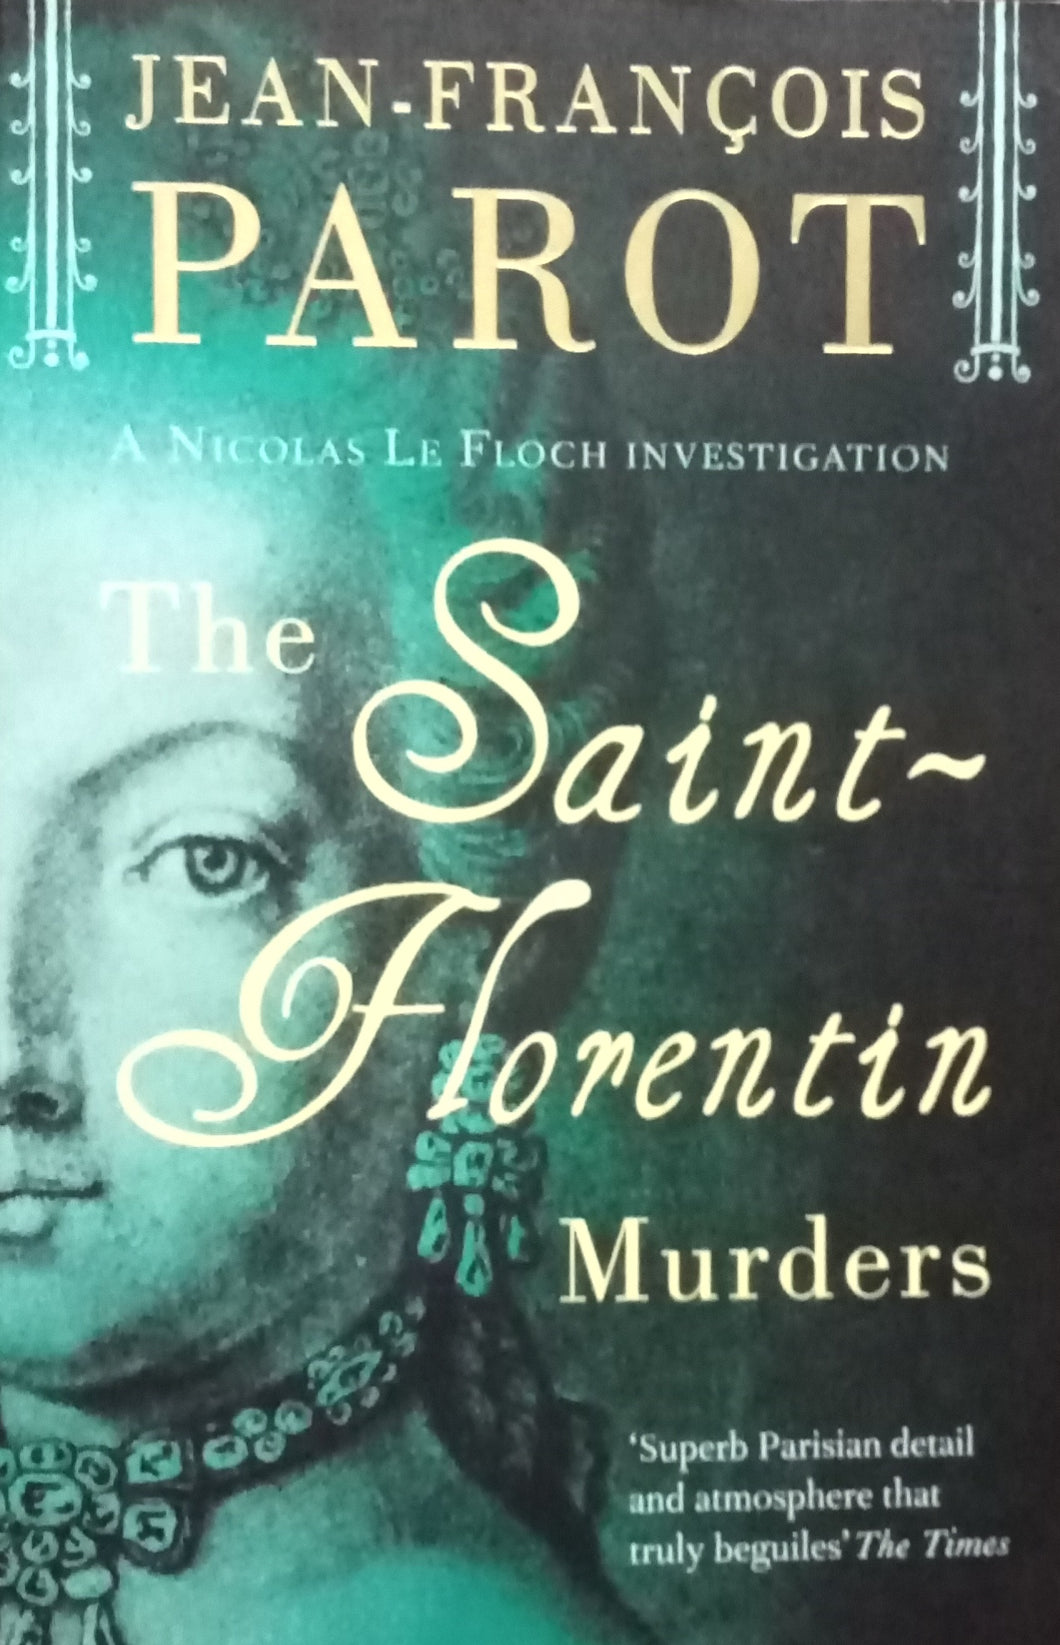 The Saint Florentin Murders by Jean Francois